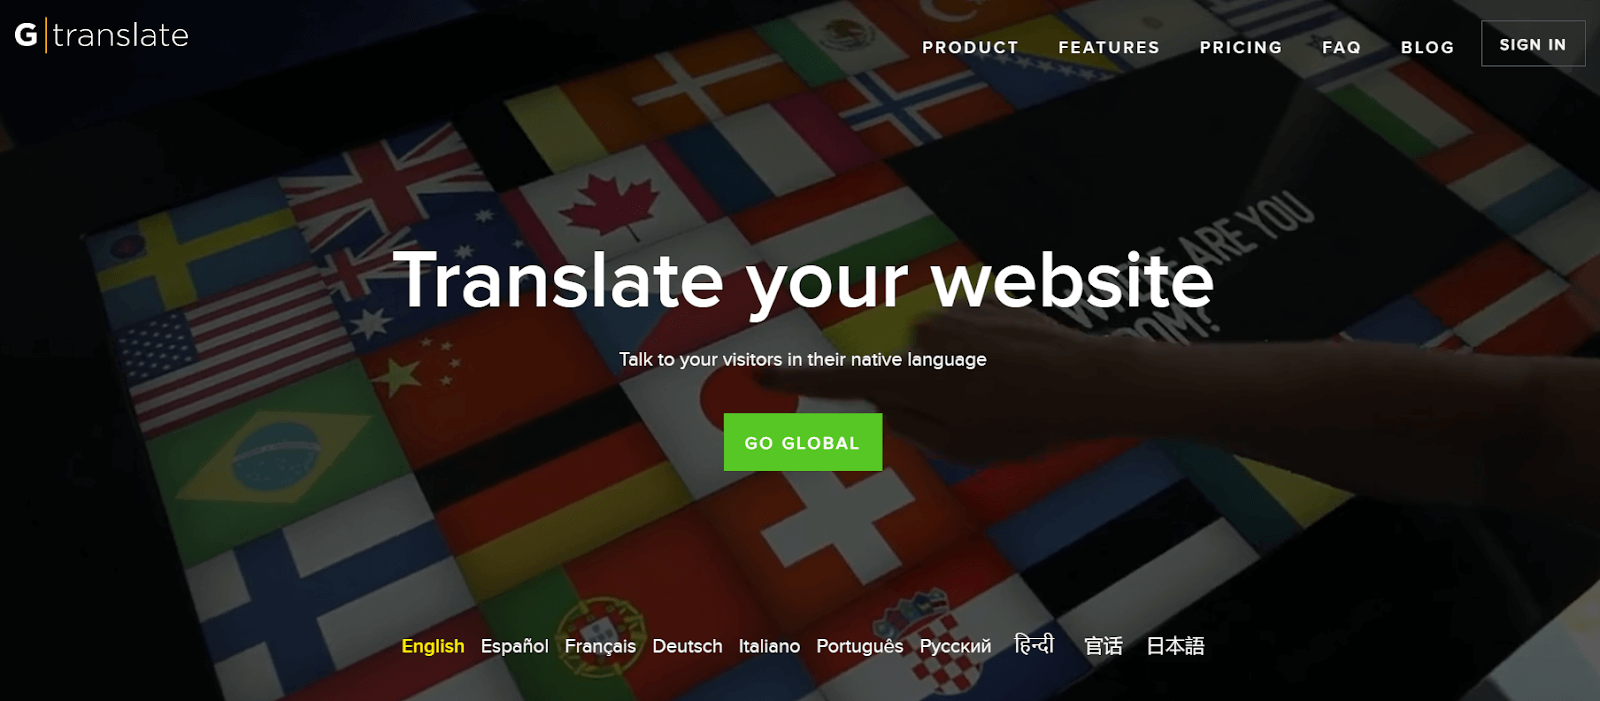 GTranslate homepage